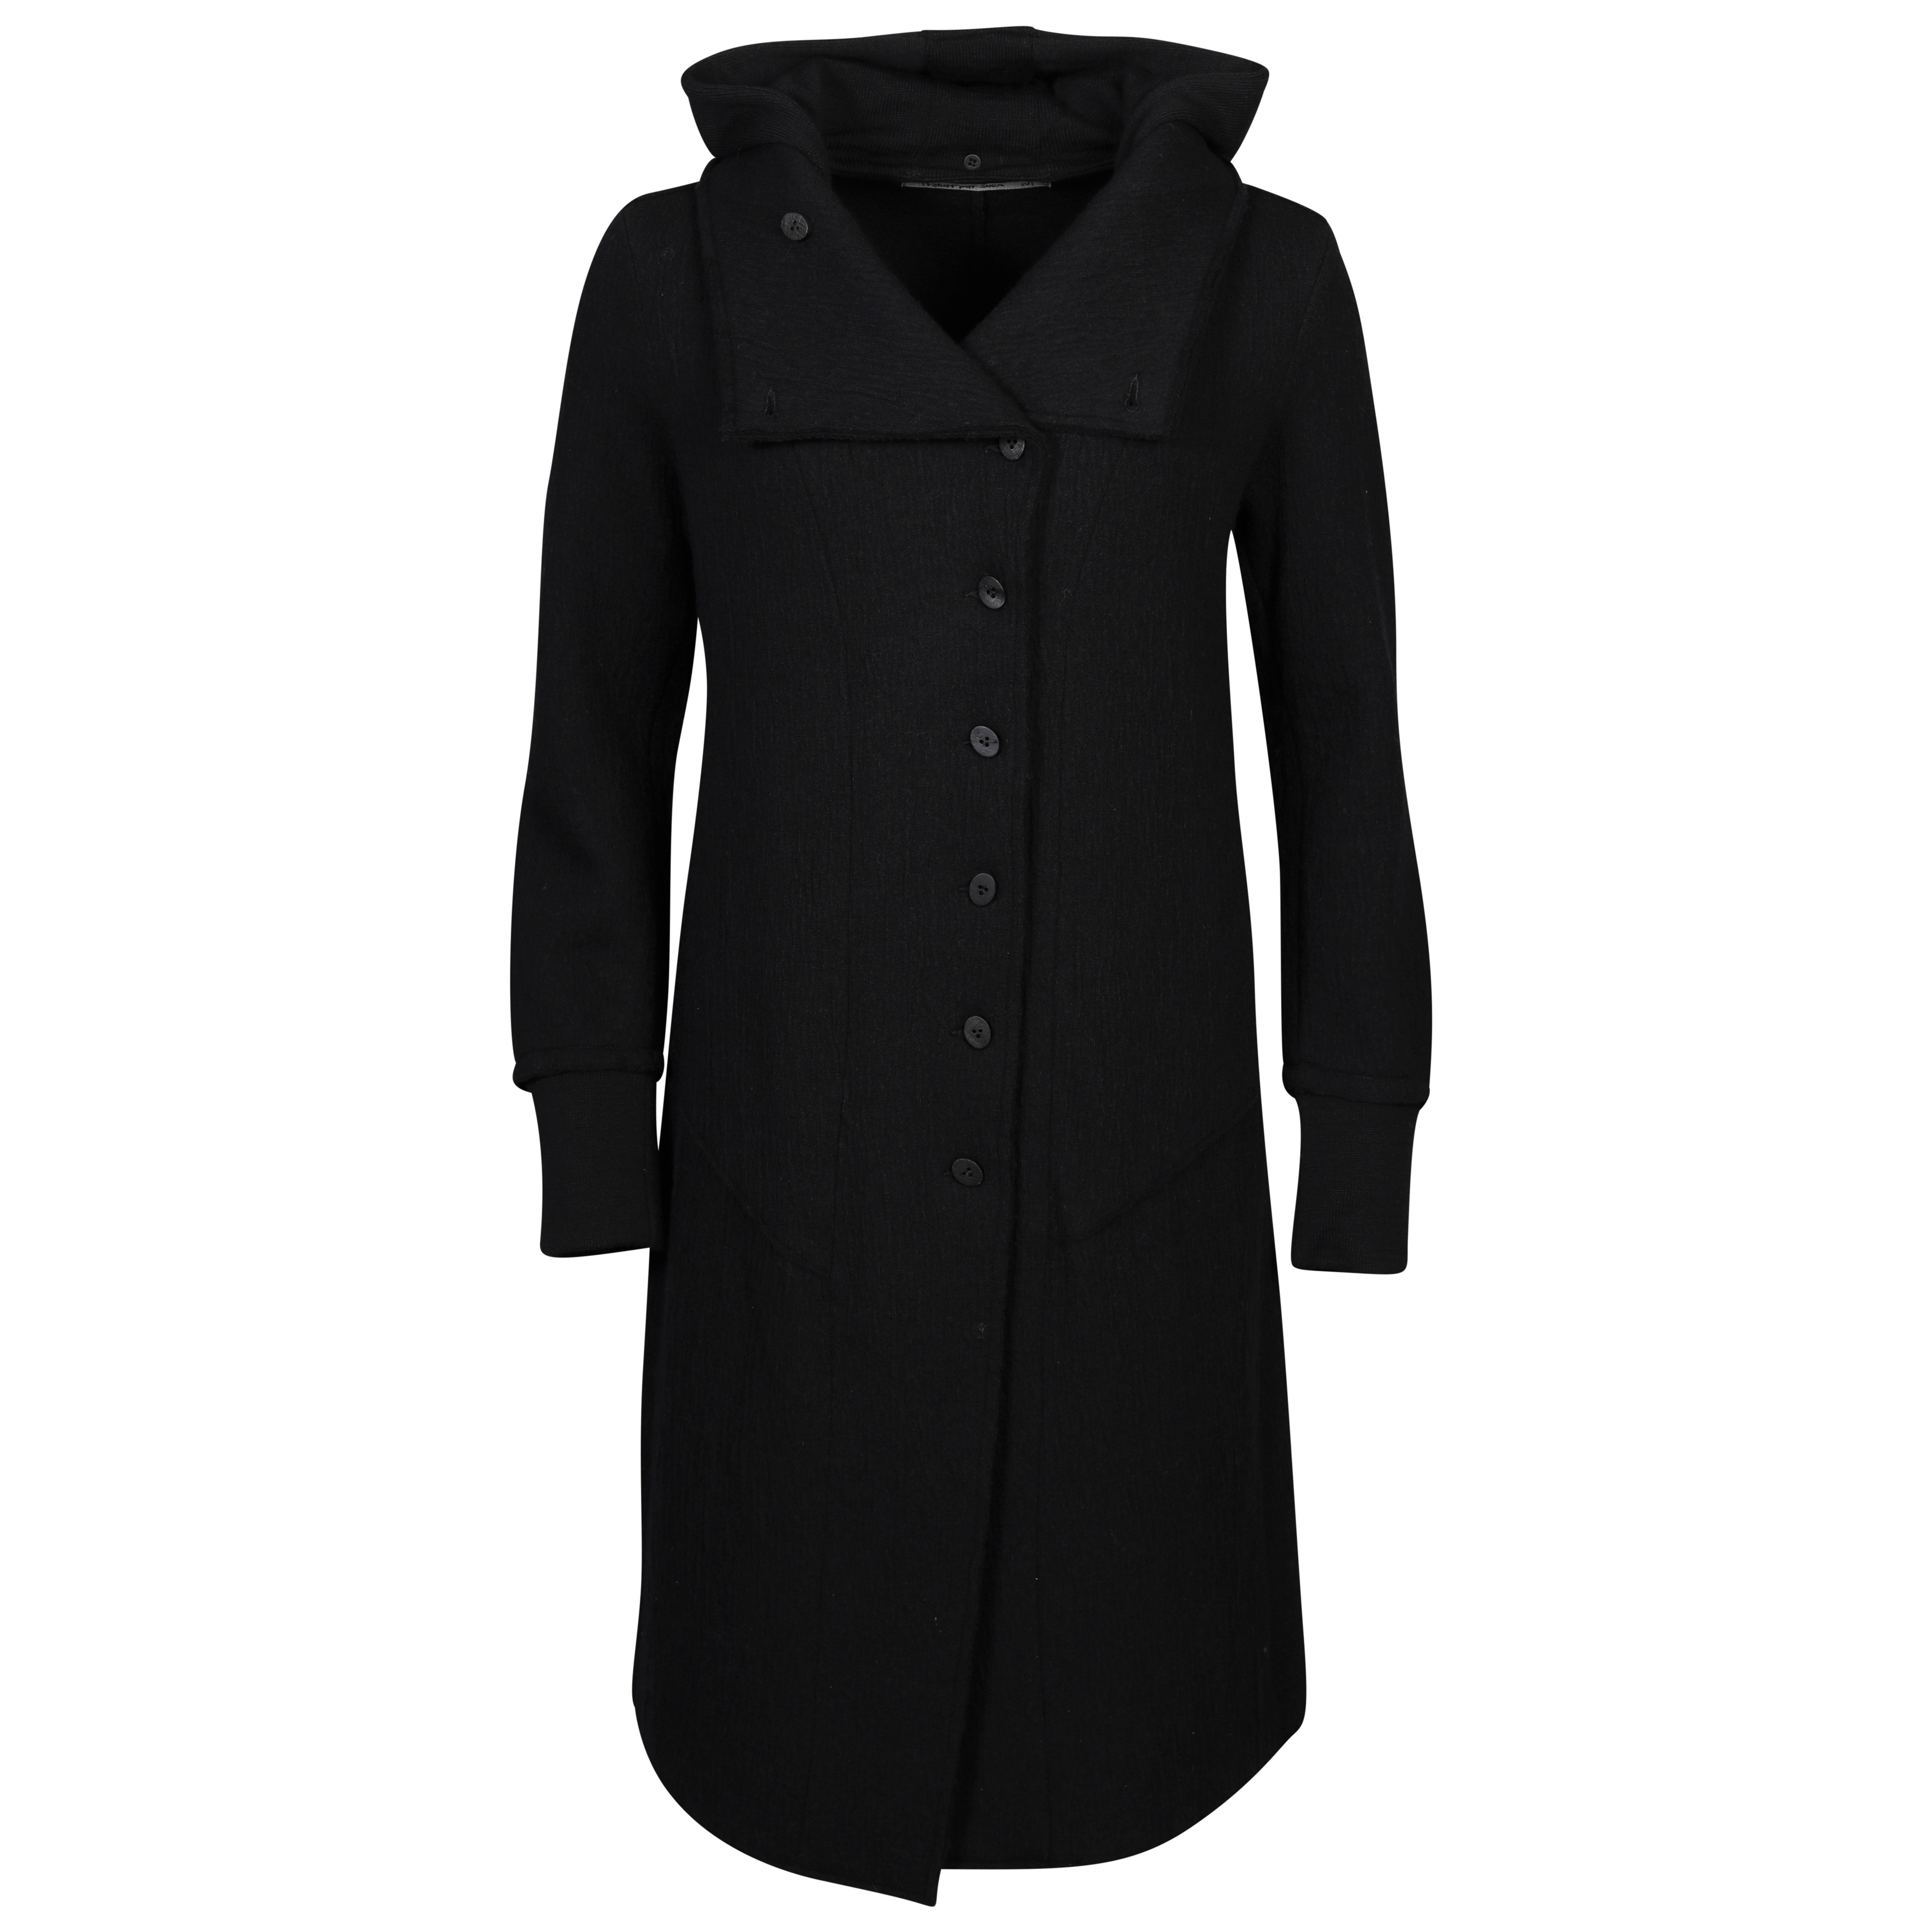 Transit Par Such Coat in Black With Detachable Hood S